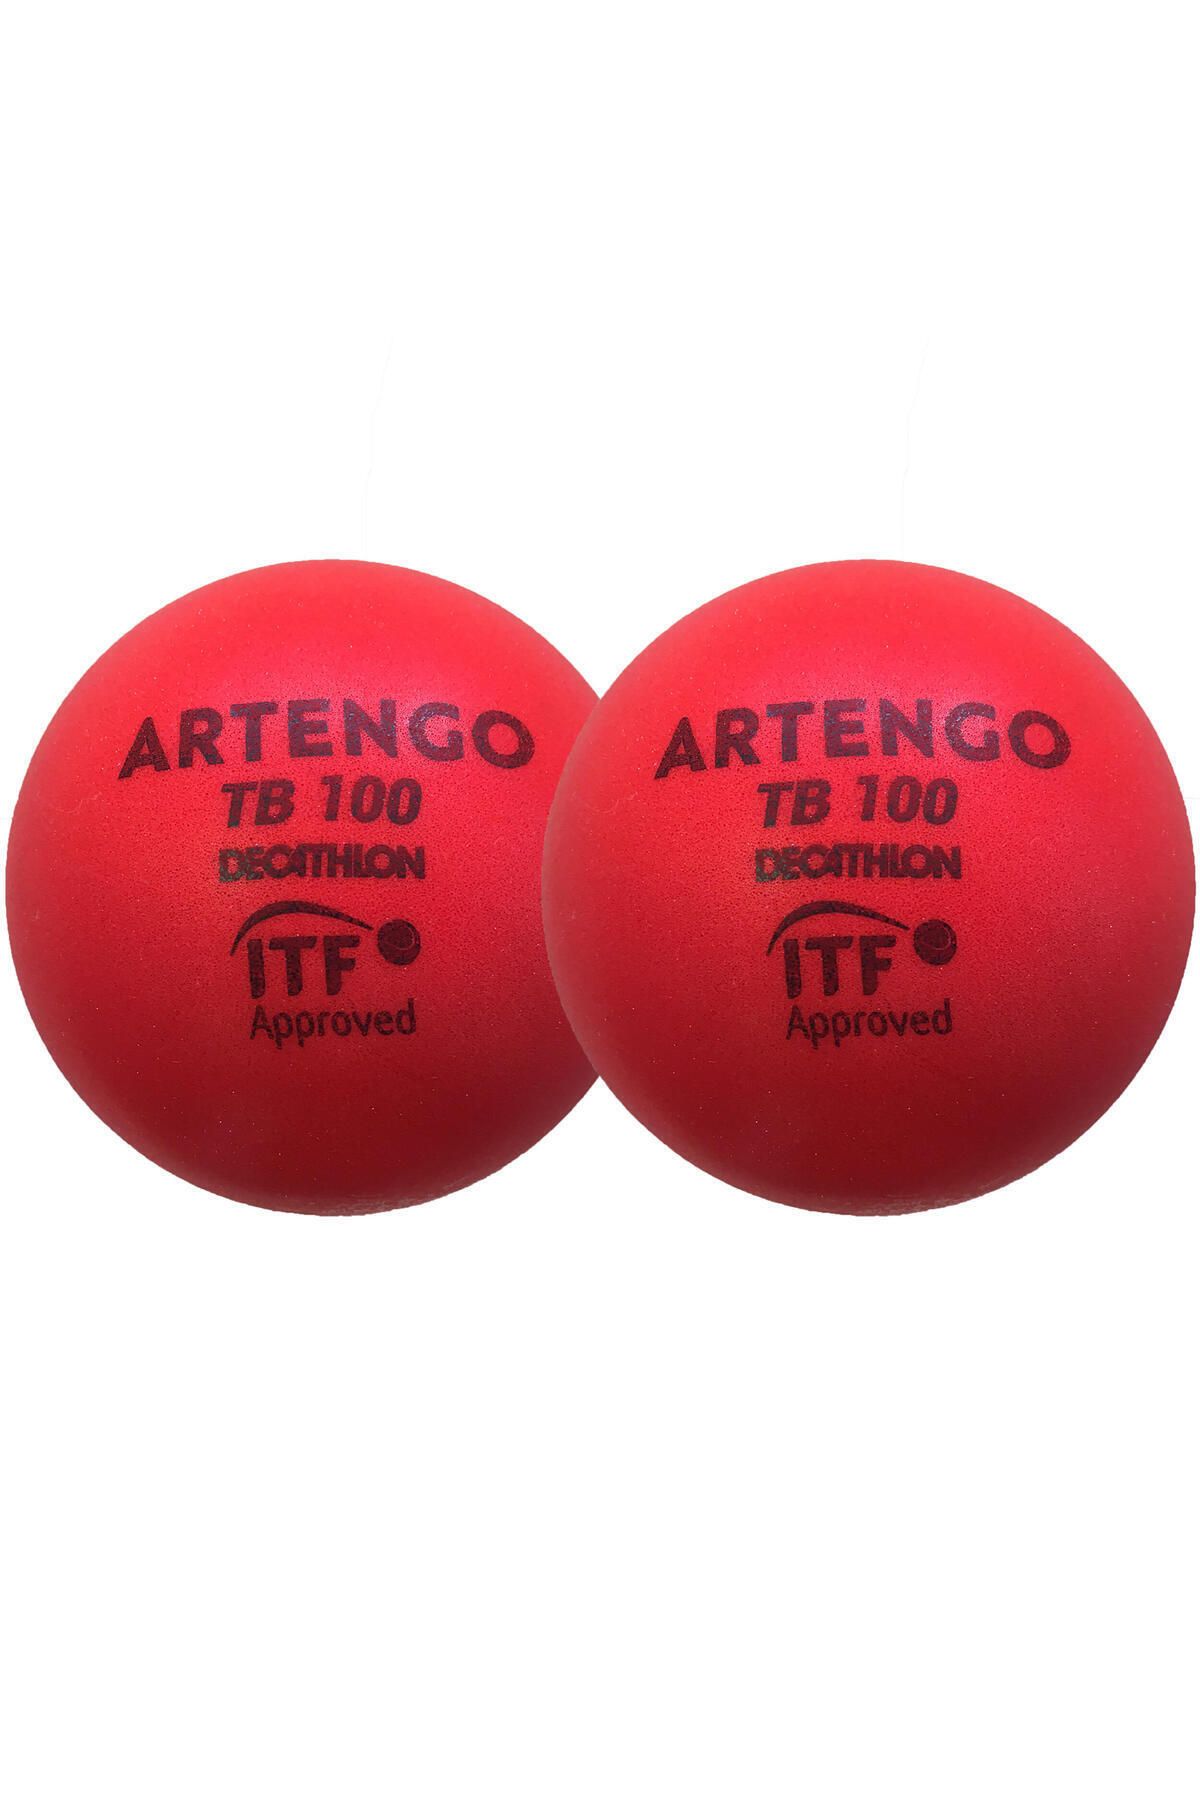 Decathlon Artengo Sünger Tenis Topu - 9 cm - 2 Adet - Kırmızı - Tb100